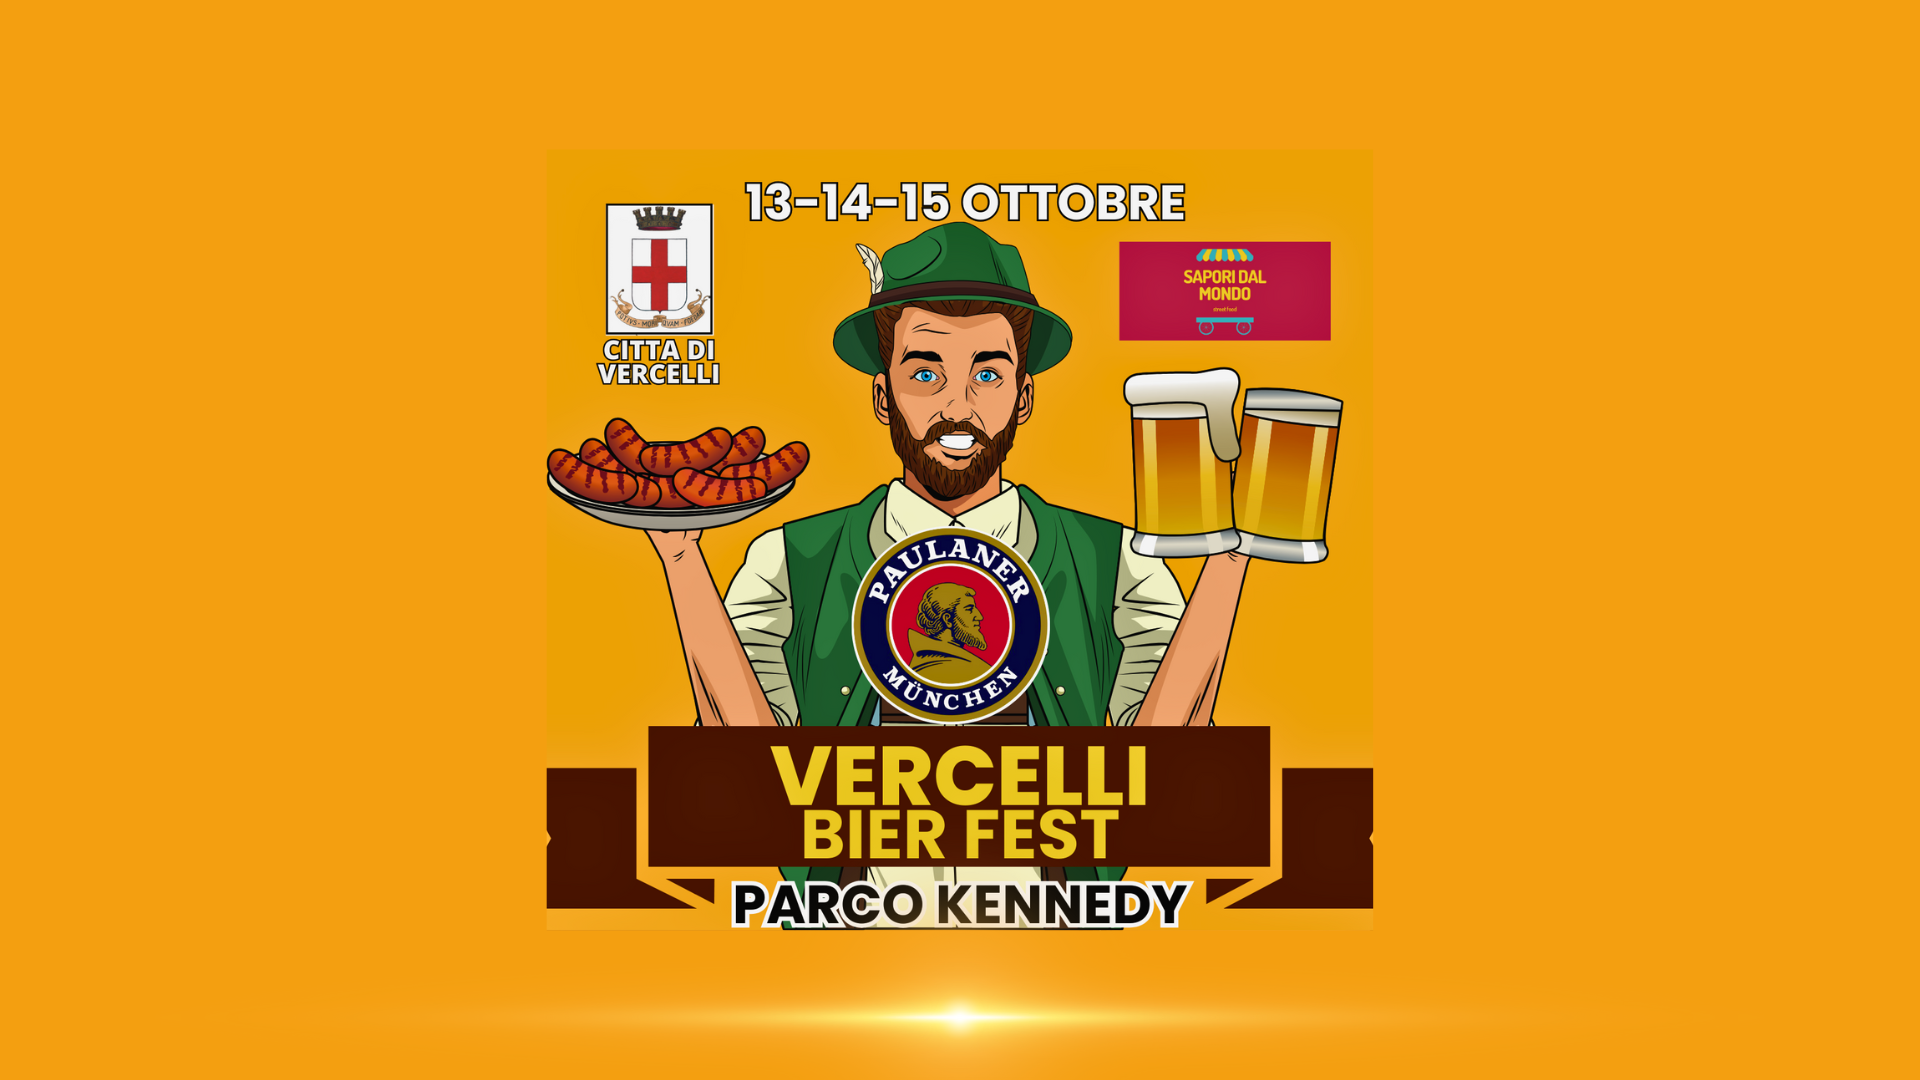 Vercelli Bier Fest: L’Oktoberfest Italiana arriva a Vercelli questo Weekend!